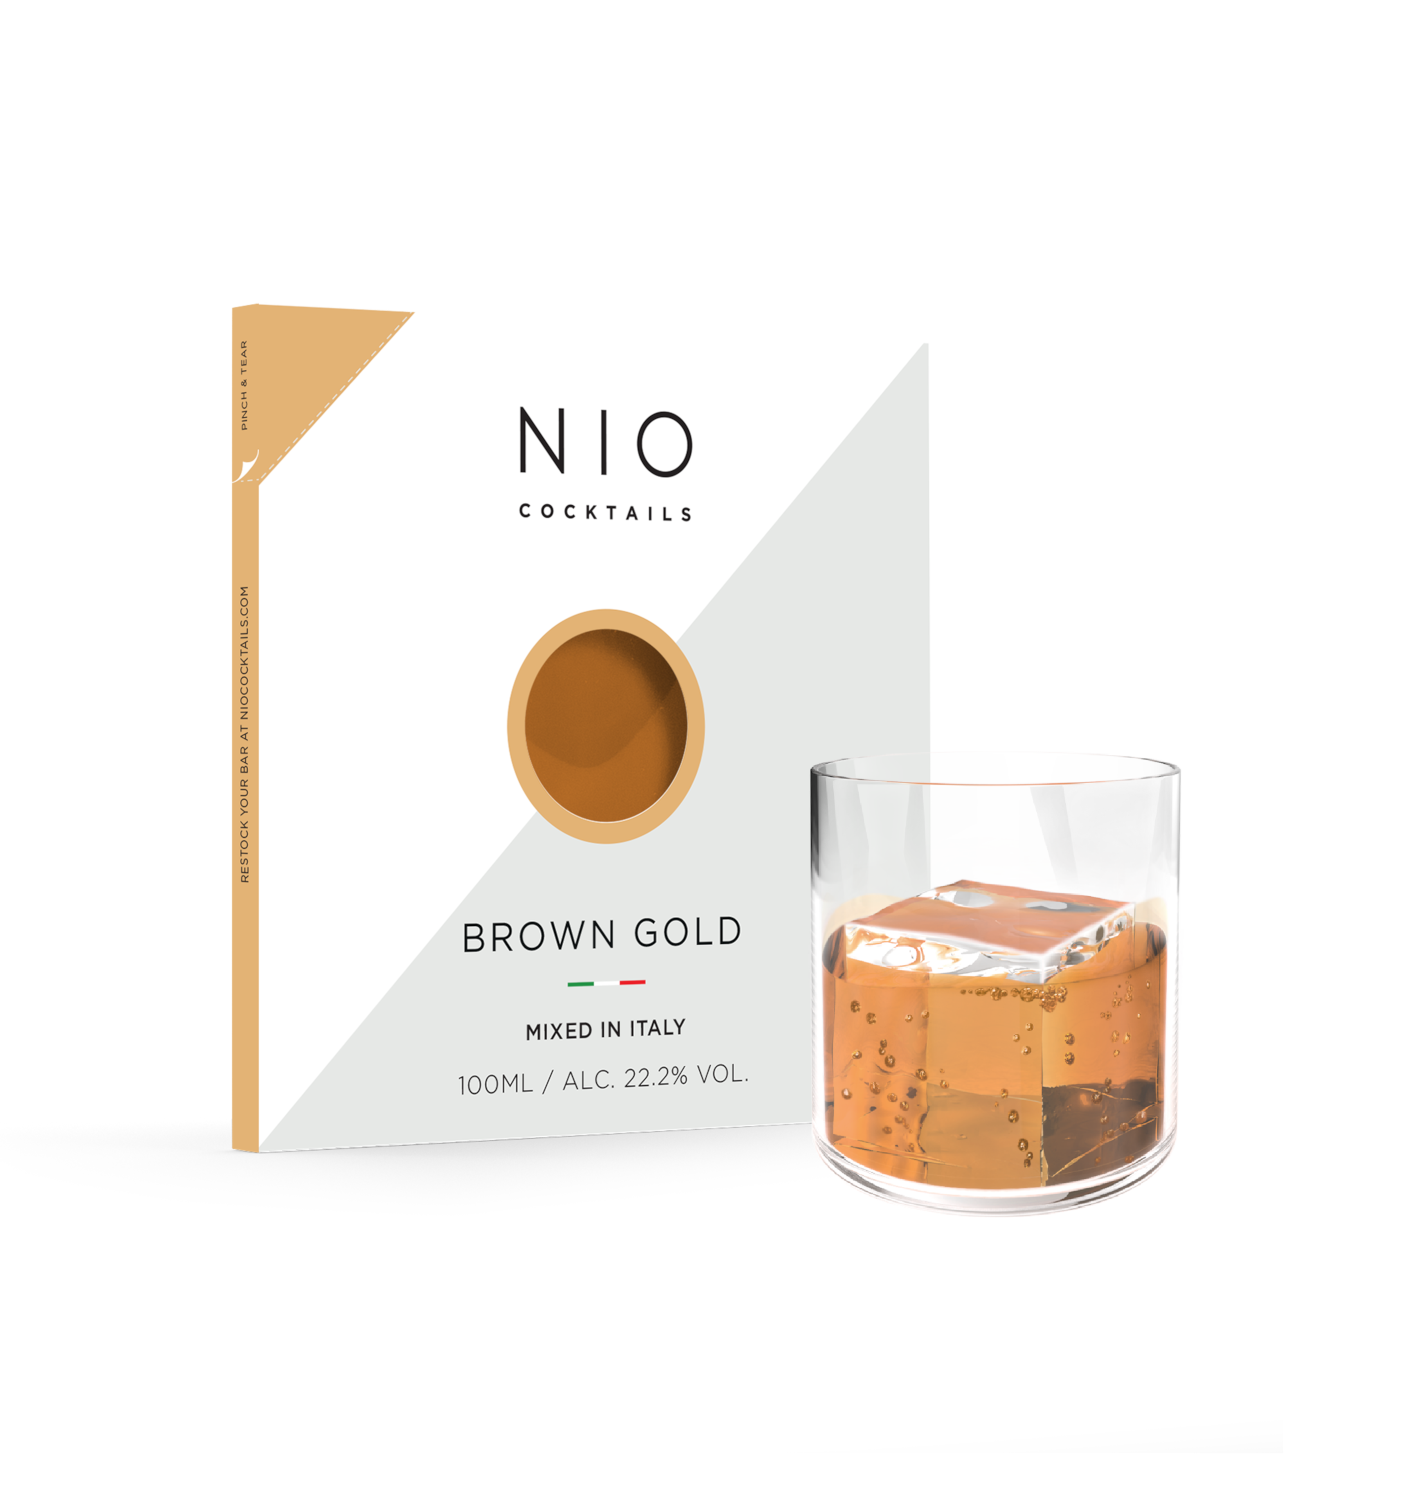 NIO Cocktails - Brown Gold